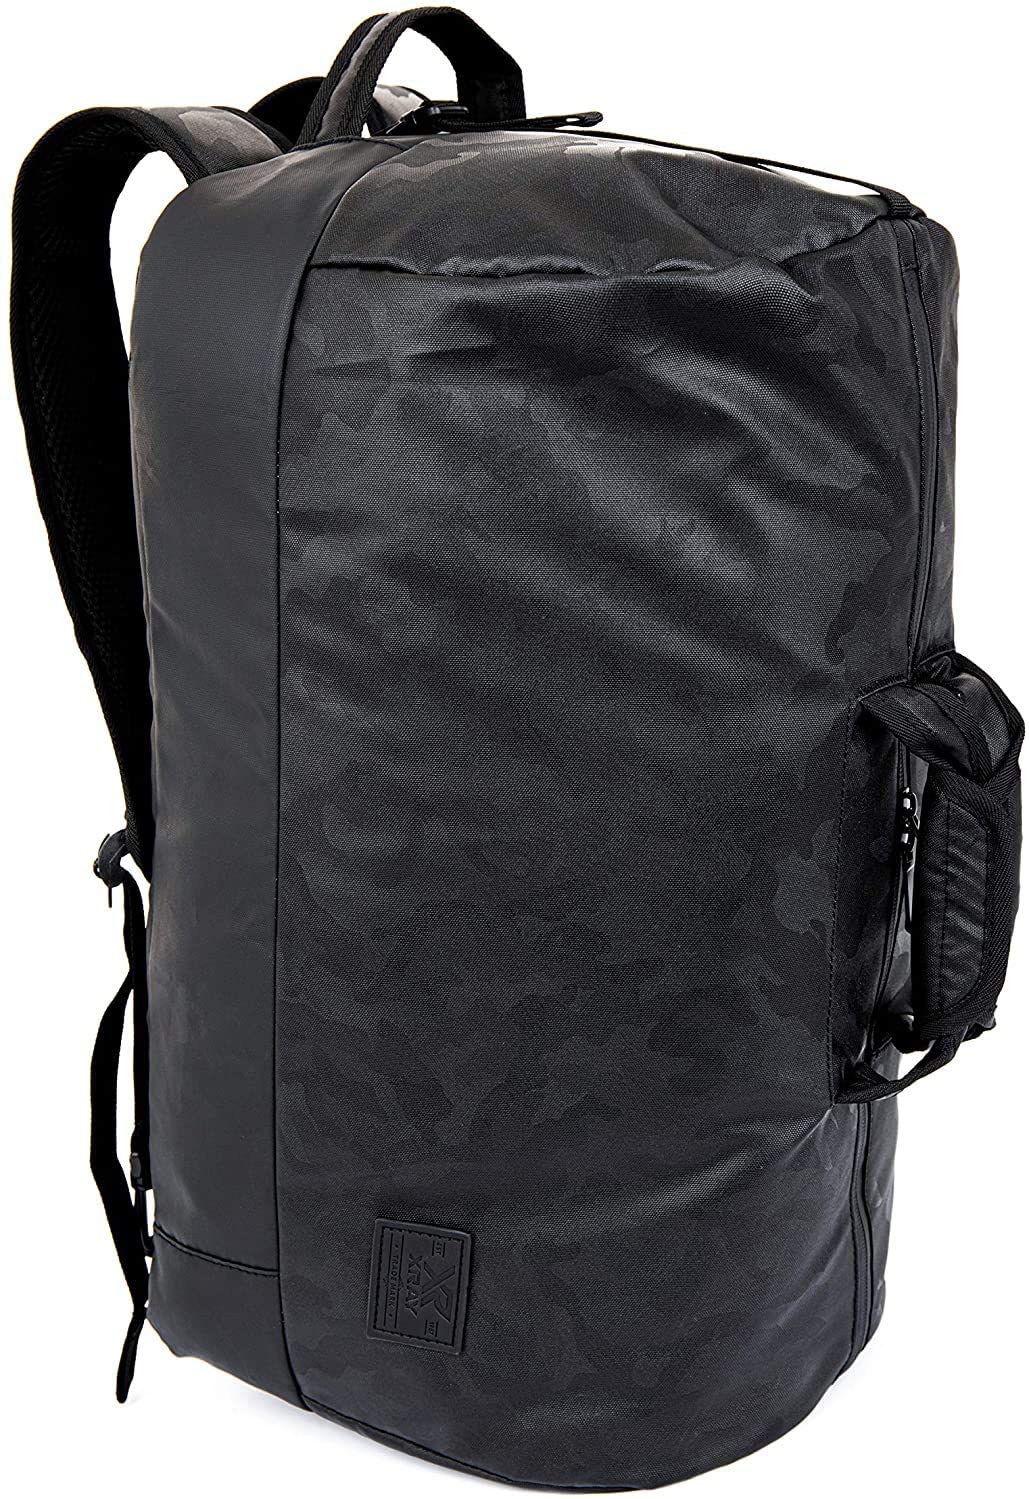 Gym Bag Backpack, Waterproof Camo Duffel Bag For Men and Women, Outdoor Travel Weekender Overnight Rucksack Duffle - image 1 of 2